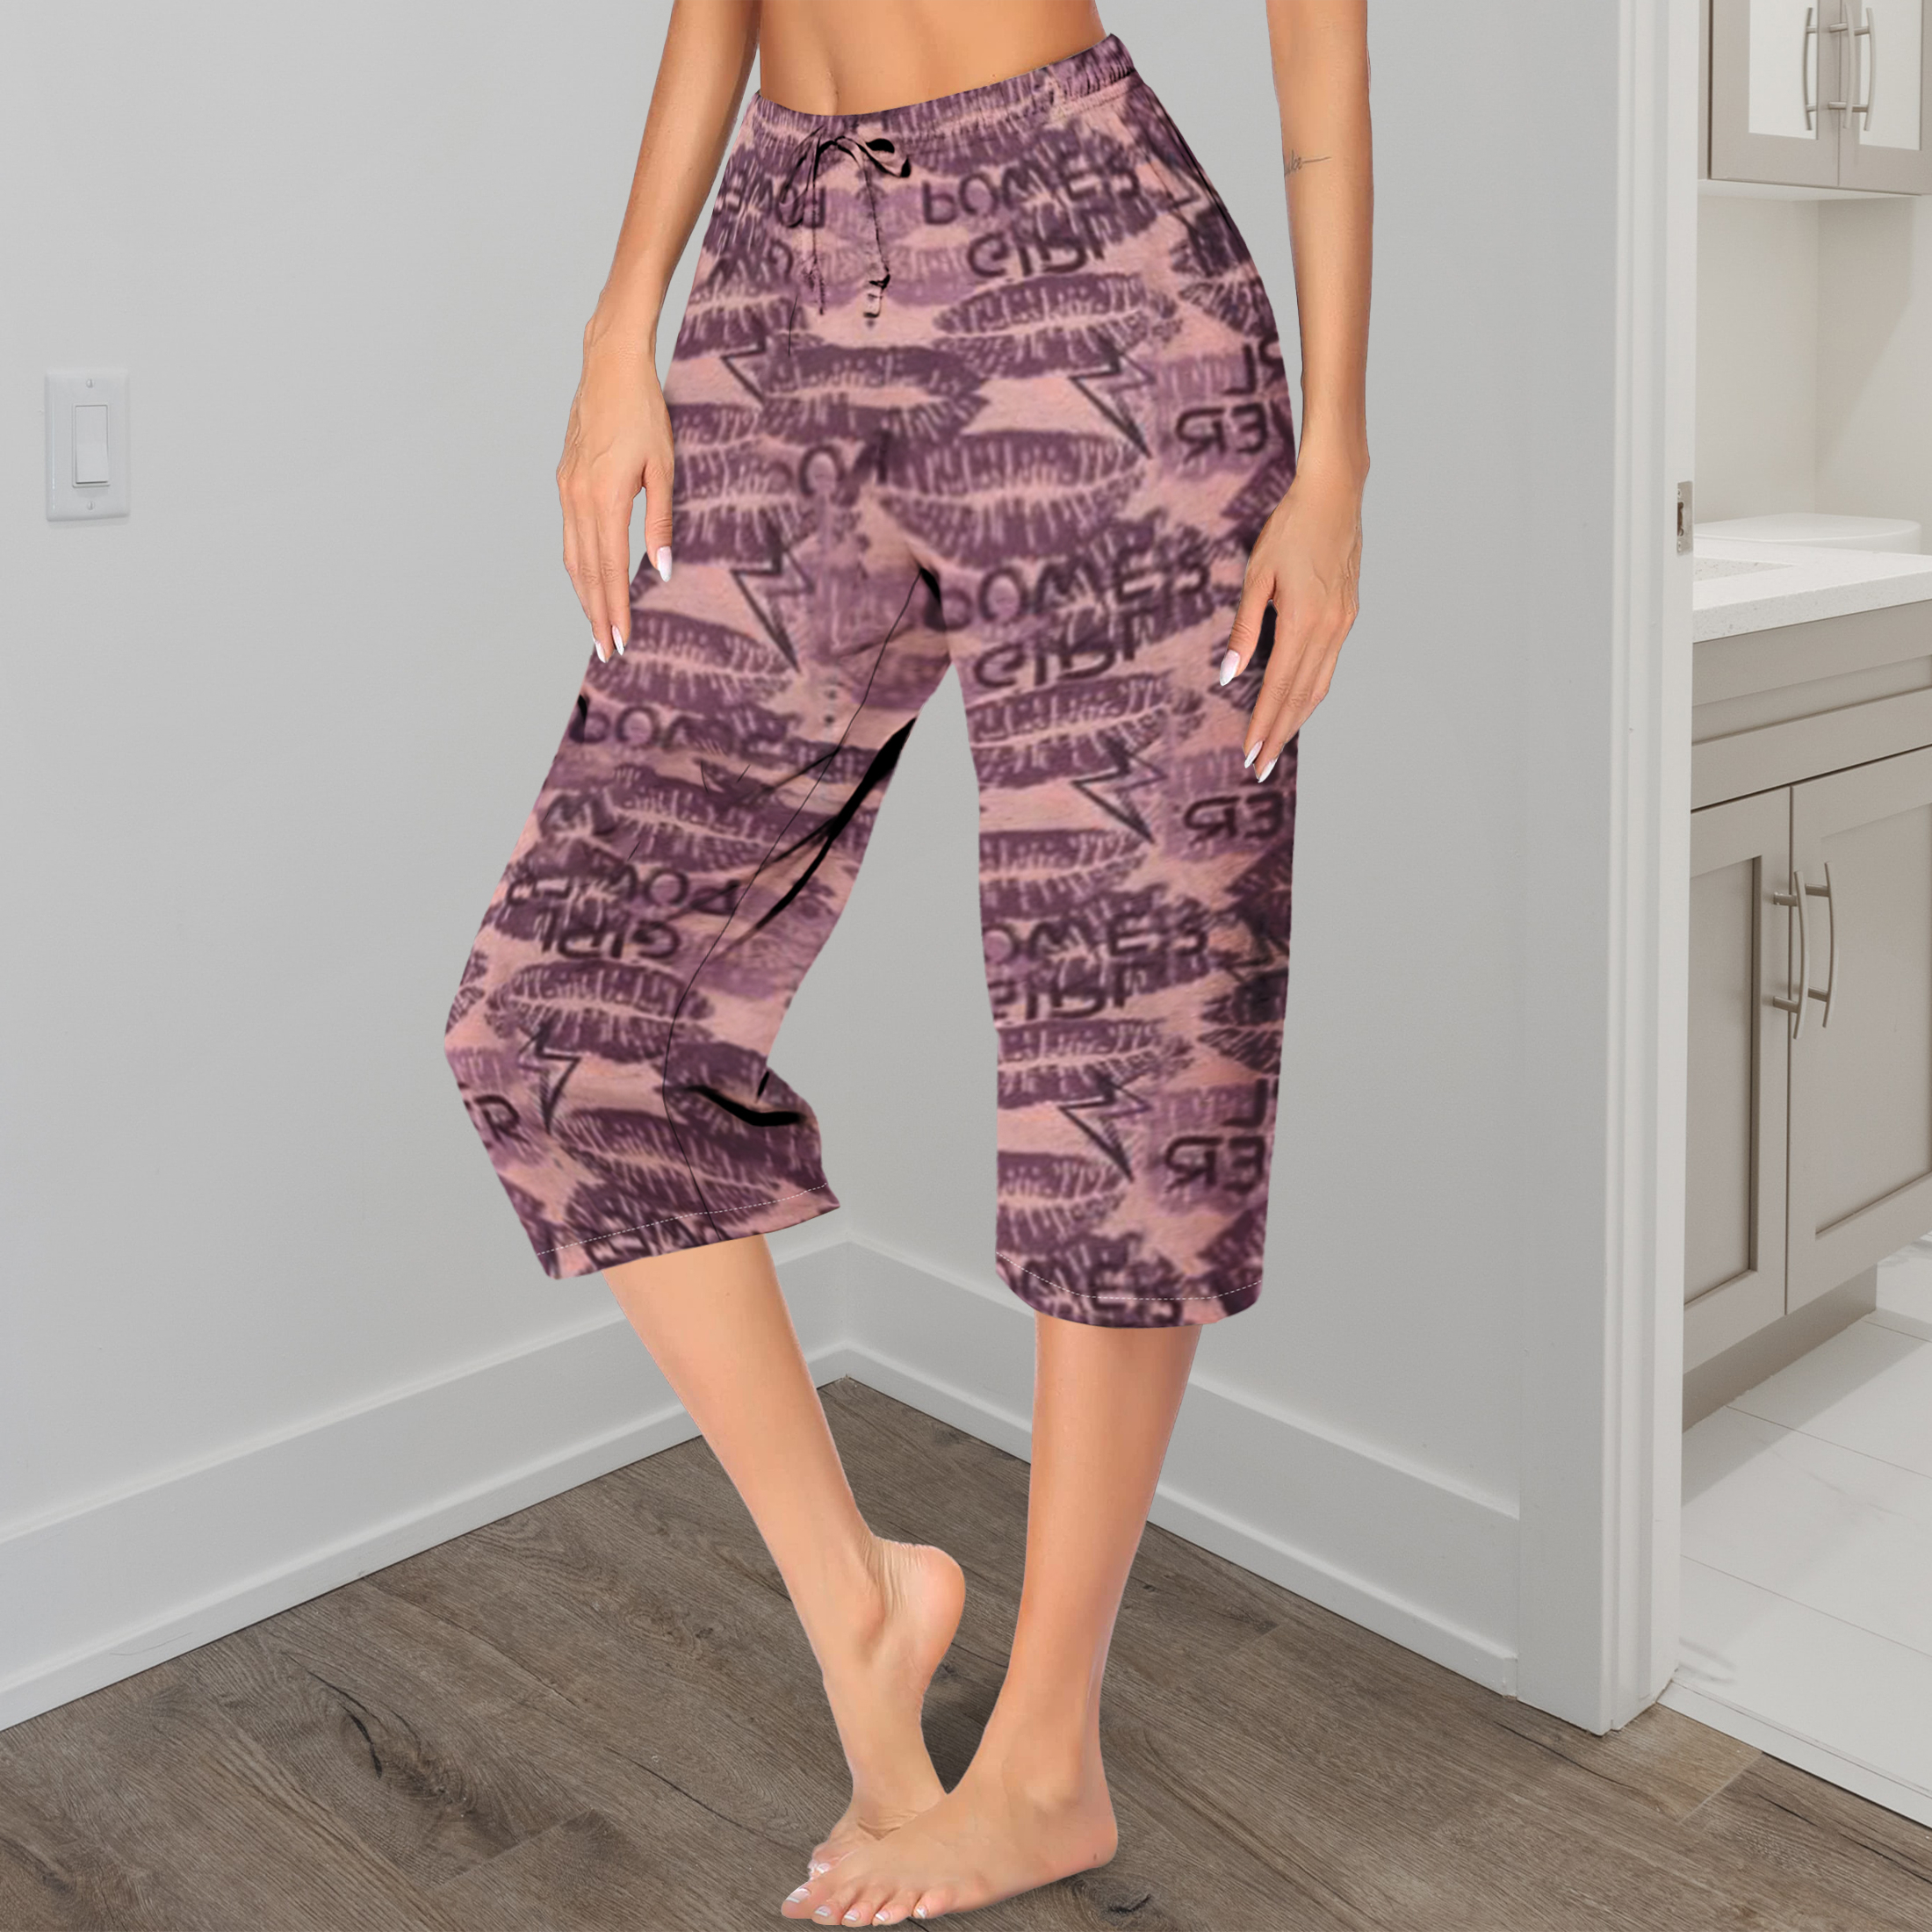 5-Pack Women's Capri Pajama Pants Soft Comfy Printed Summer Sleepwear Ladies PJ Bottom With Drawstring - L